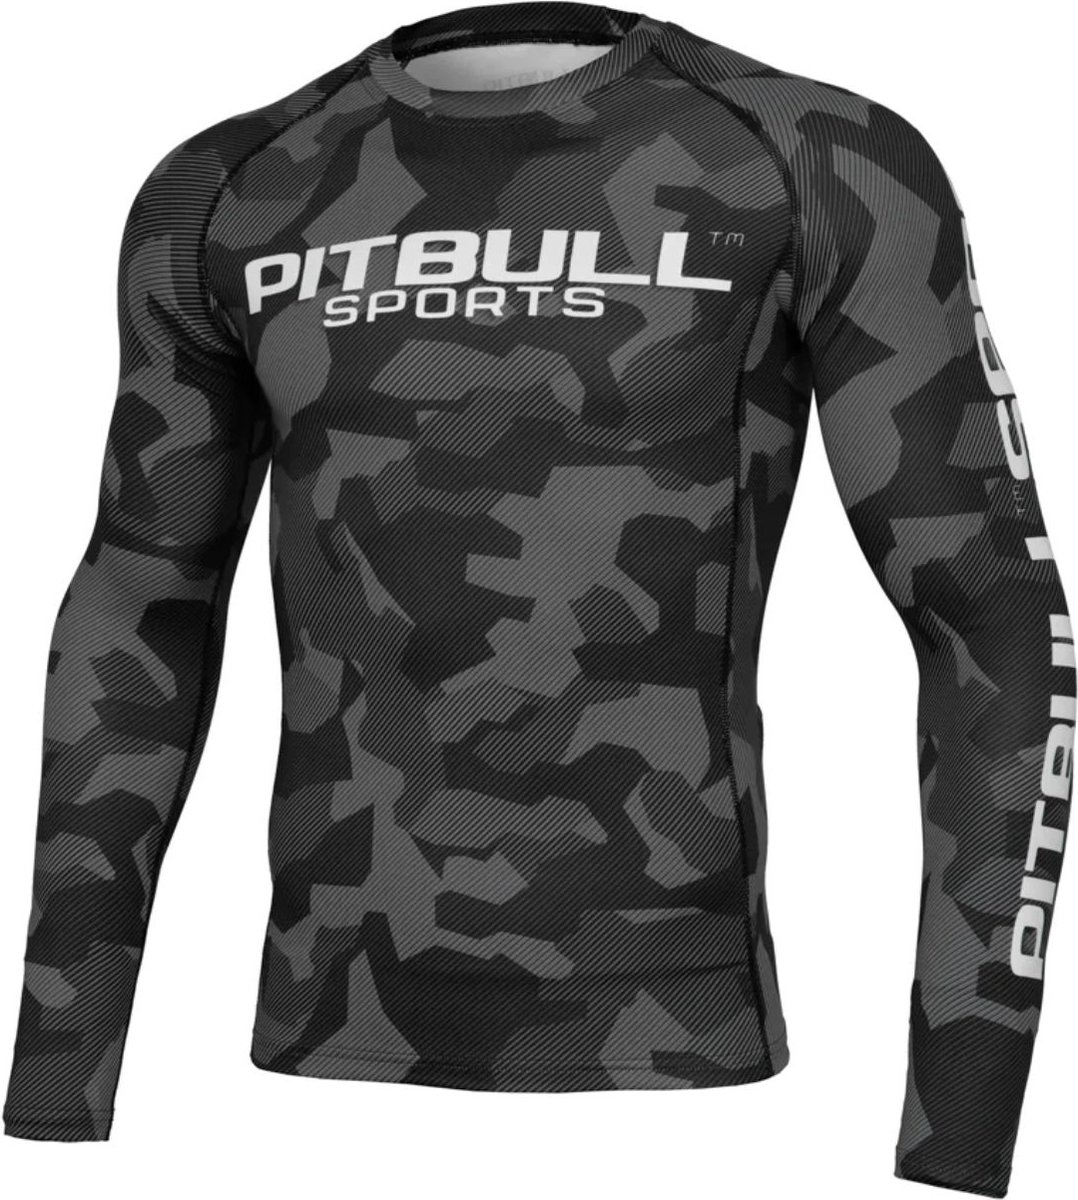 Pit Bull - Dillard Camo - Rashguard Long Sleeve - Compressie shirt lange mouwen - Grijs - Maat XL